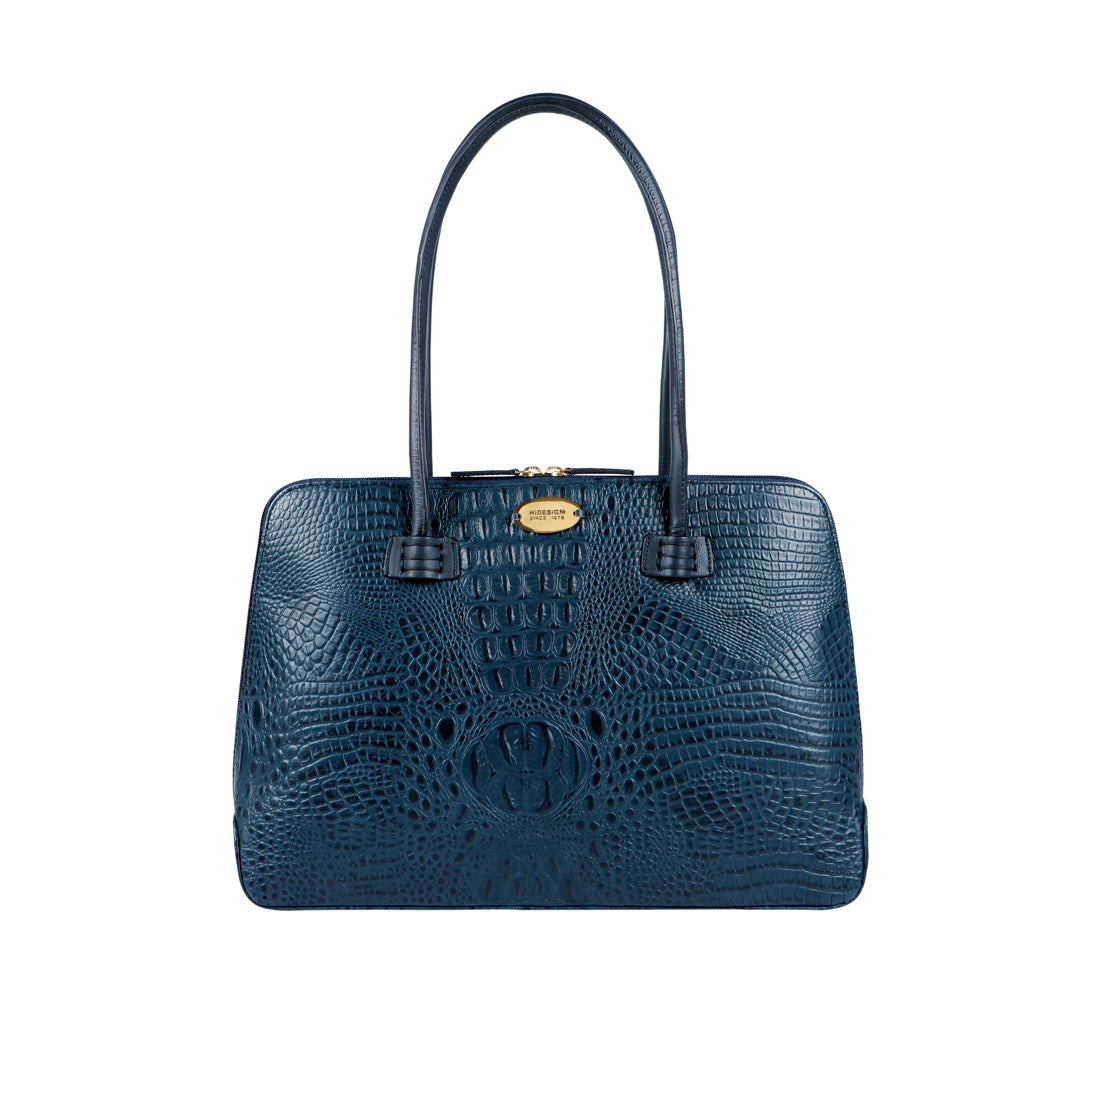 Buy Blue Ee Dubai 01 Tote Bag Online - Hidesign